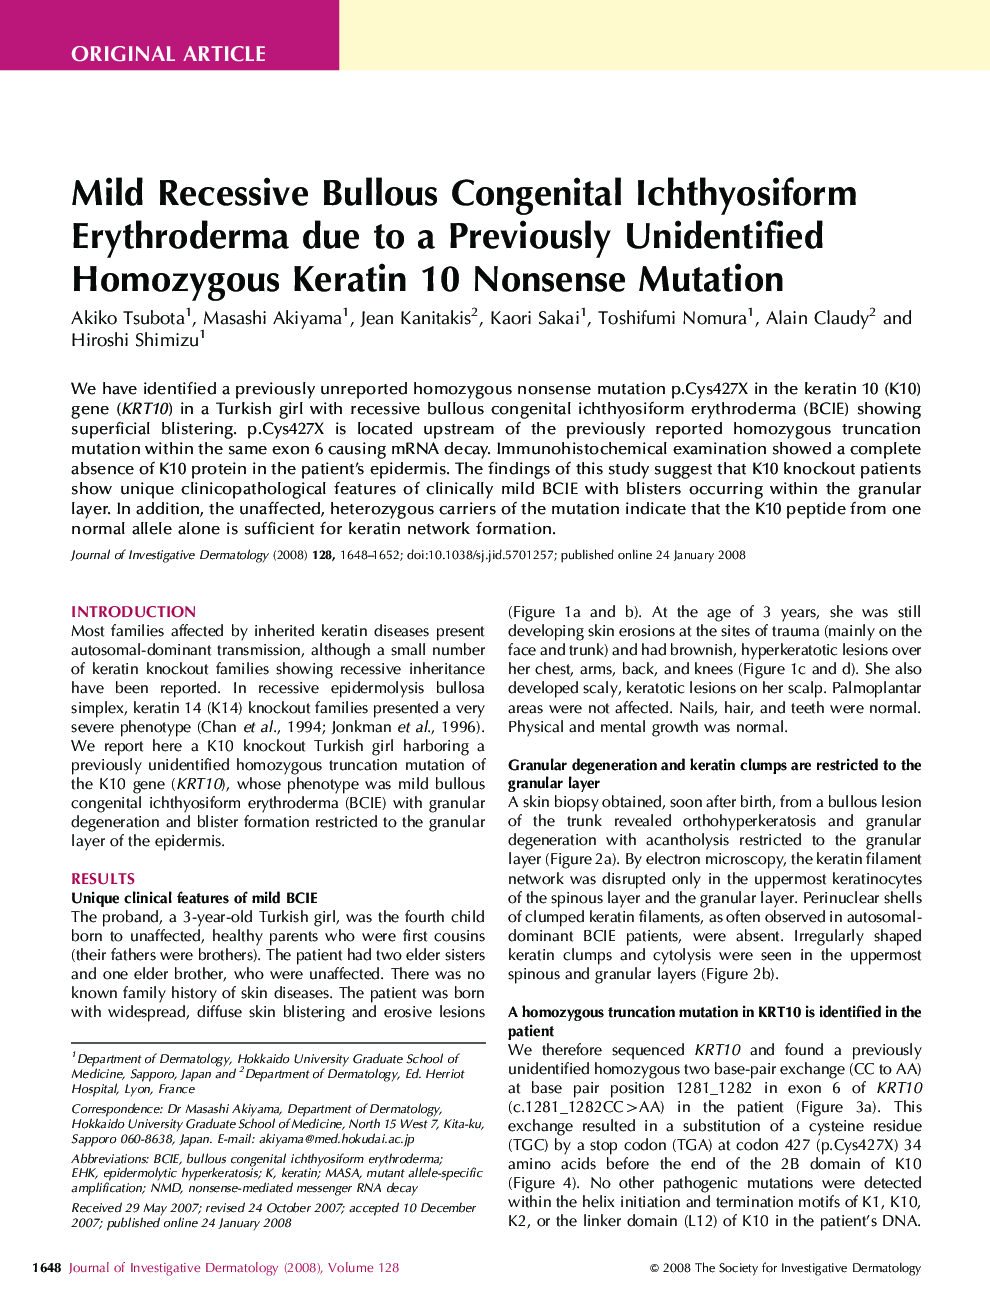 Mild Recessive Bullous Congenital Ichthyosiform Erythroderma due to a Previously Unidentified Homozygous Keratin 10 Nonsense Mutation